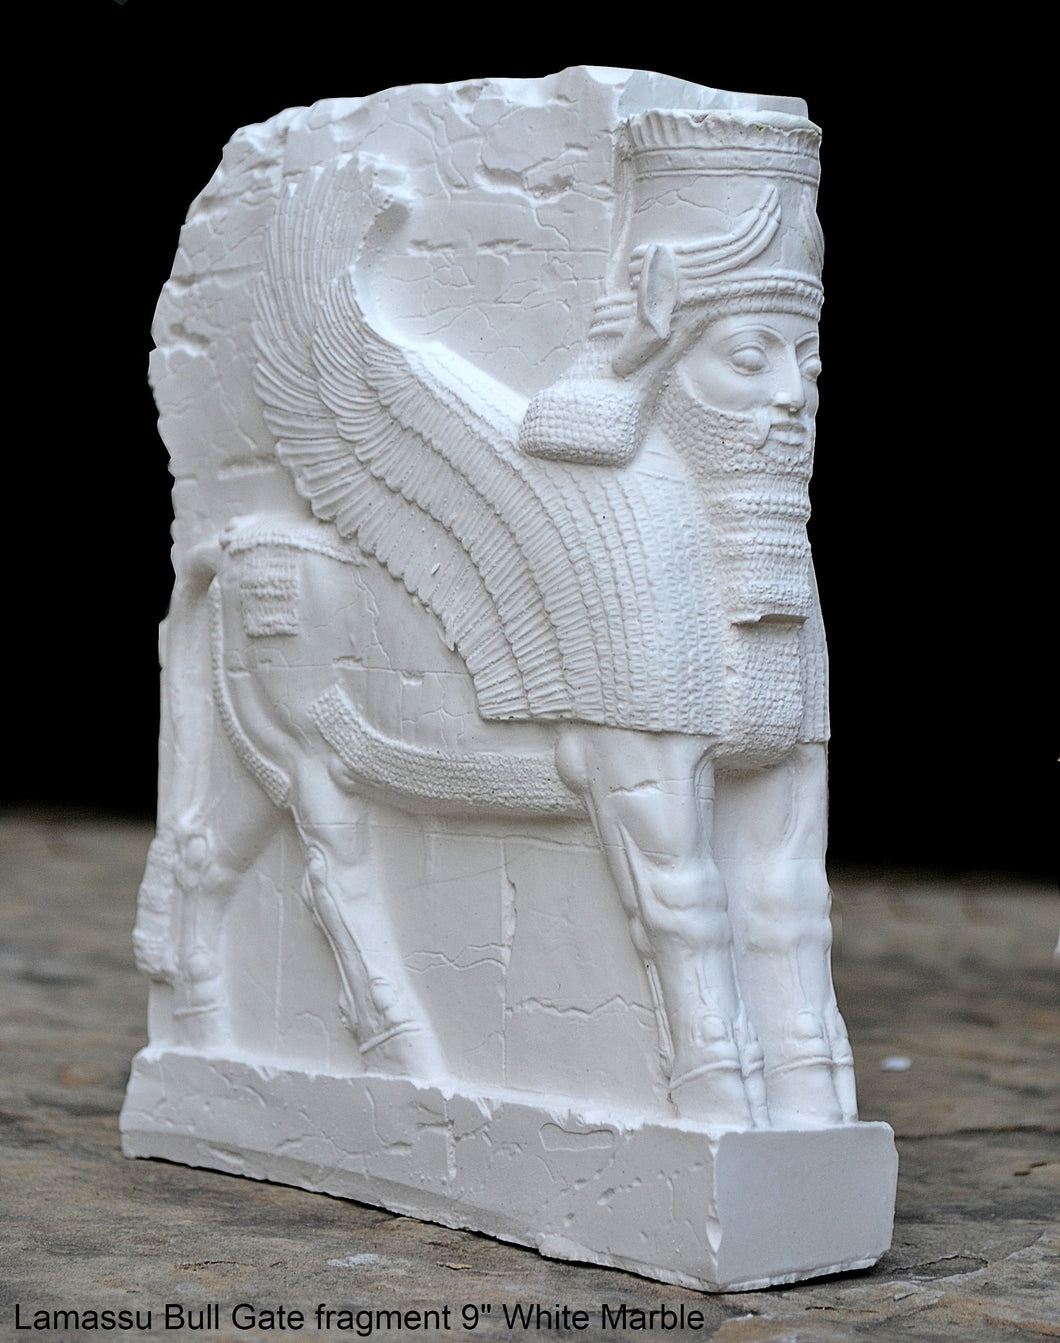 Historical Assyrian Lamassu Persian winged bull Guardian of Persepolis relief sculpture ancient replica Sculpture www.Neo-Mfg.com 9